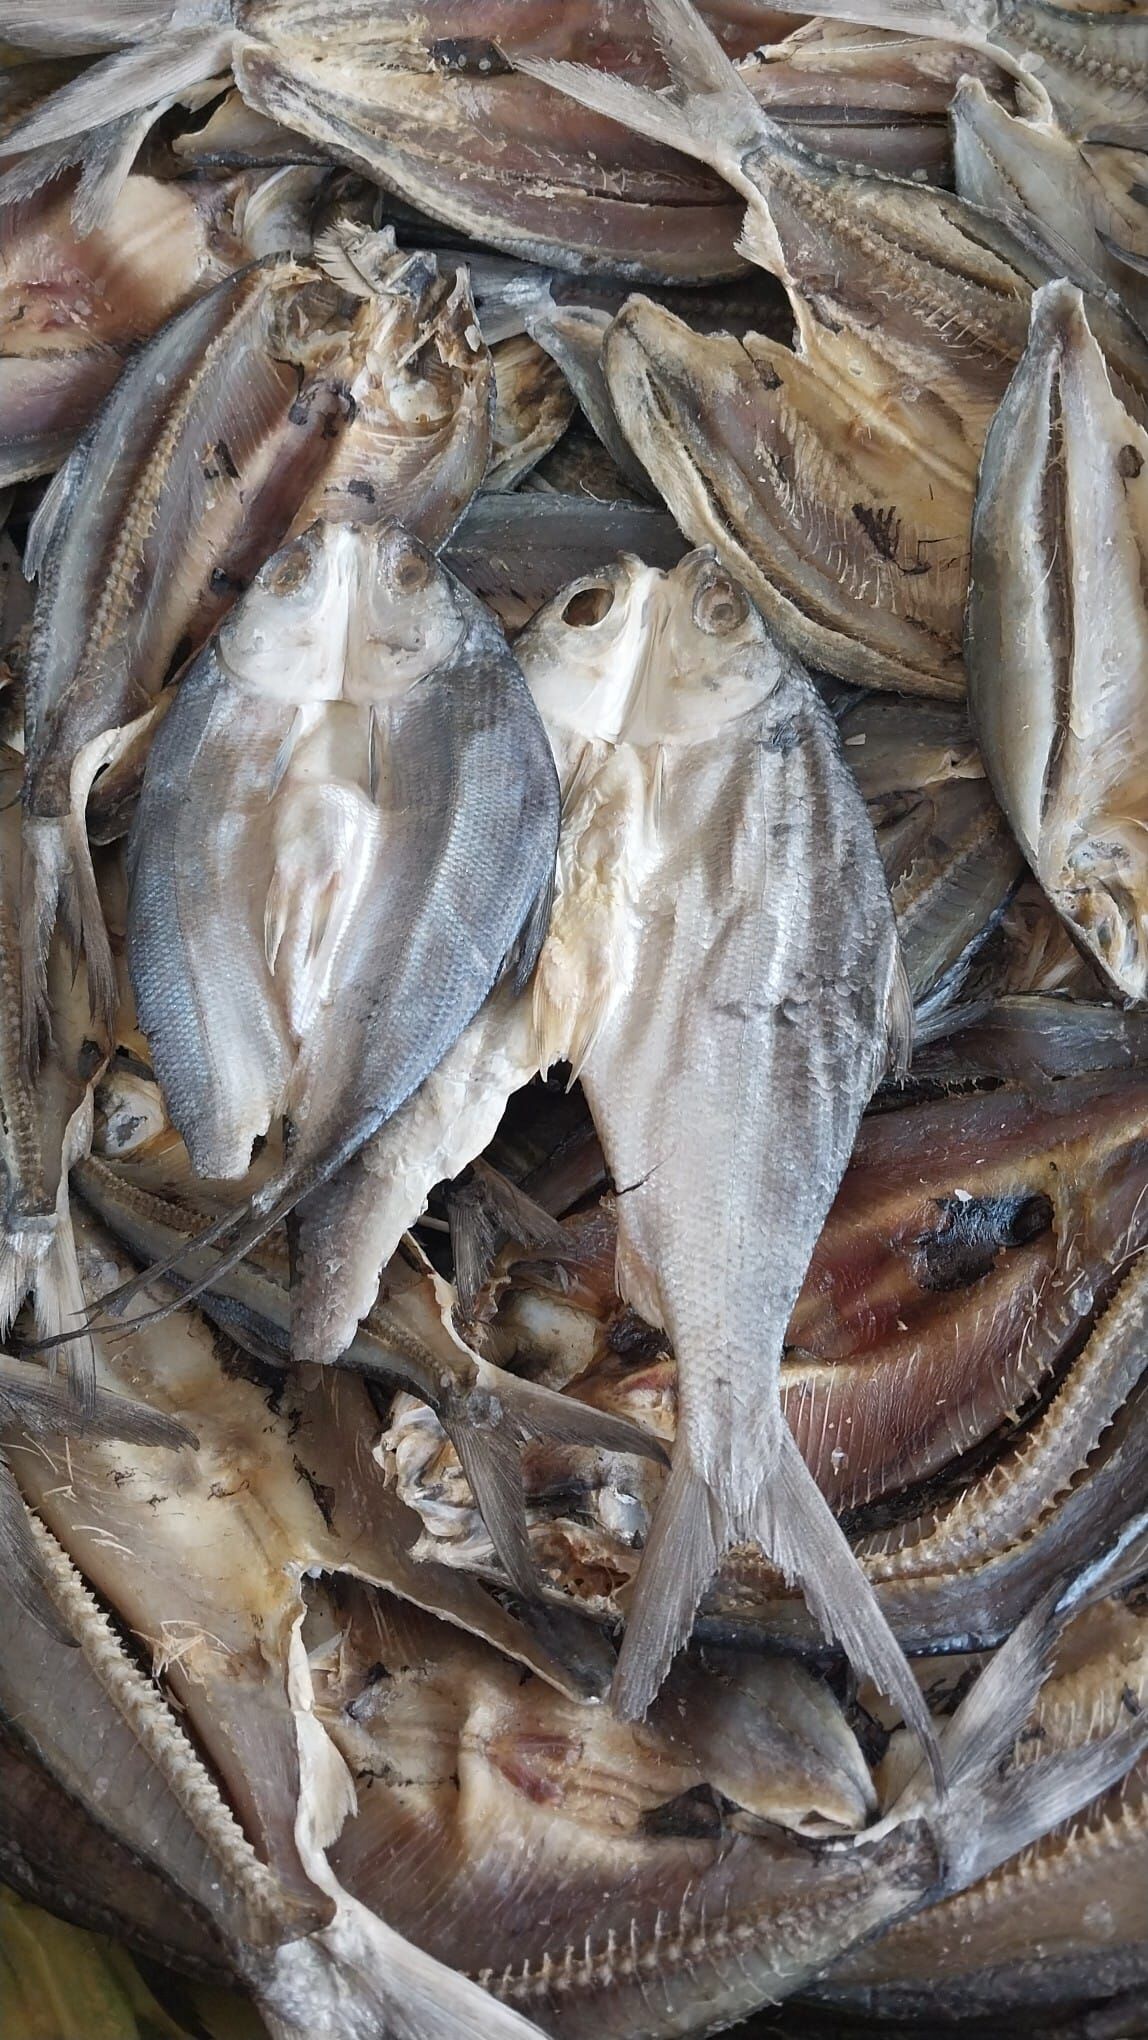 Stockfish of Cod in 45 Kg bales – Dryfish of Norway